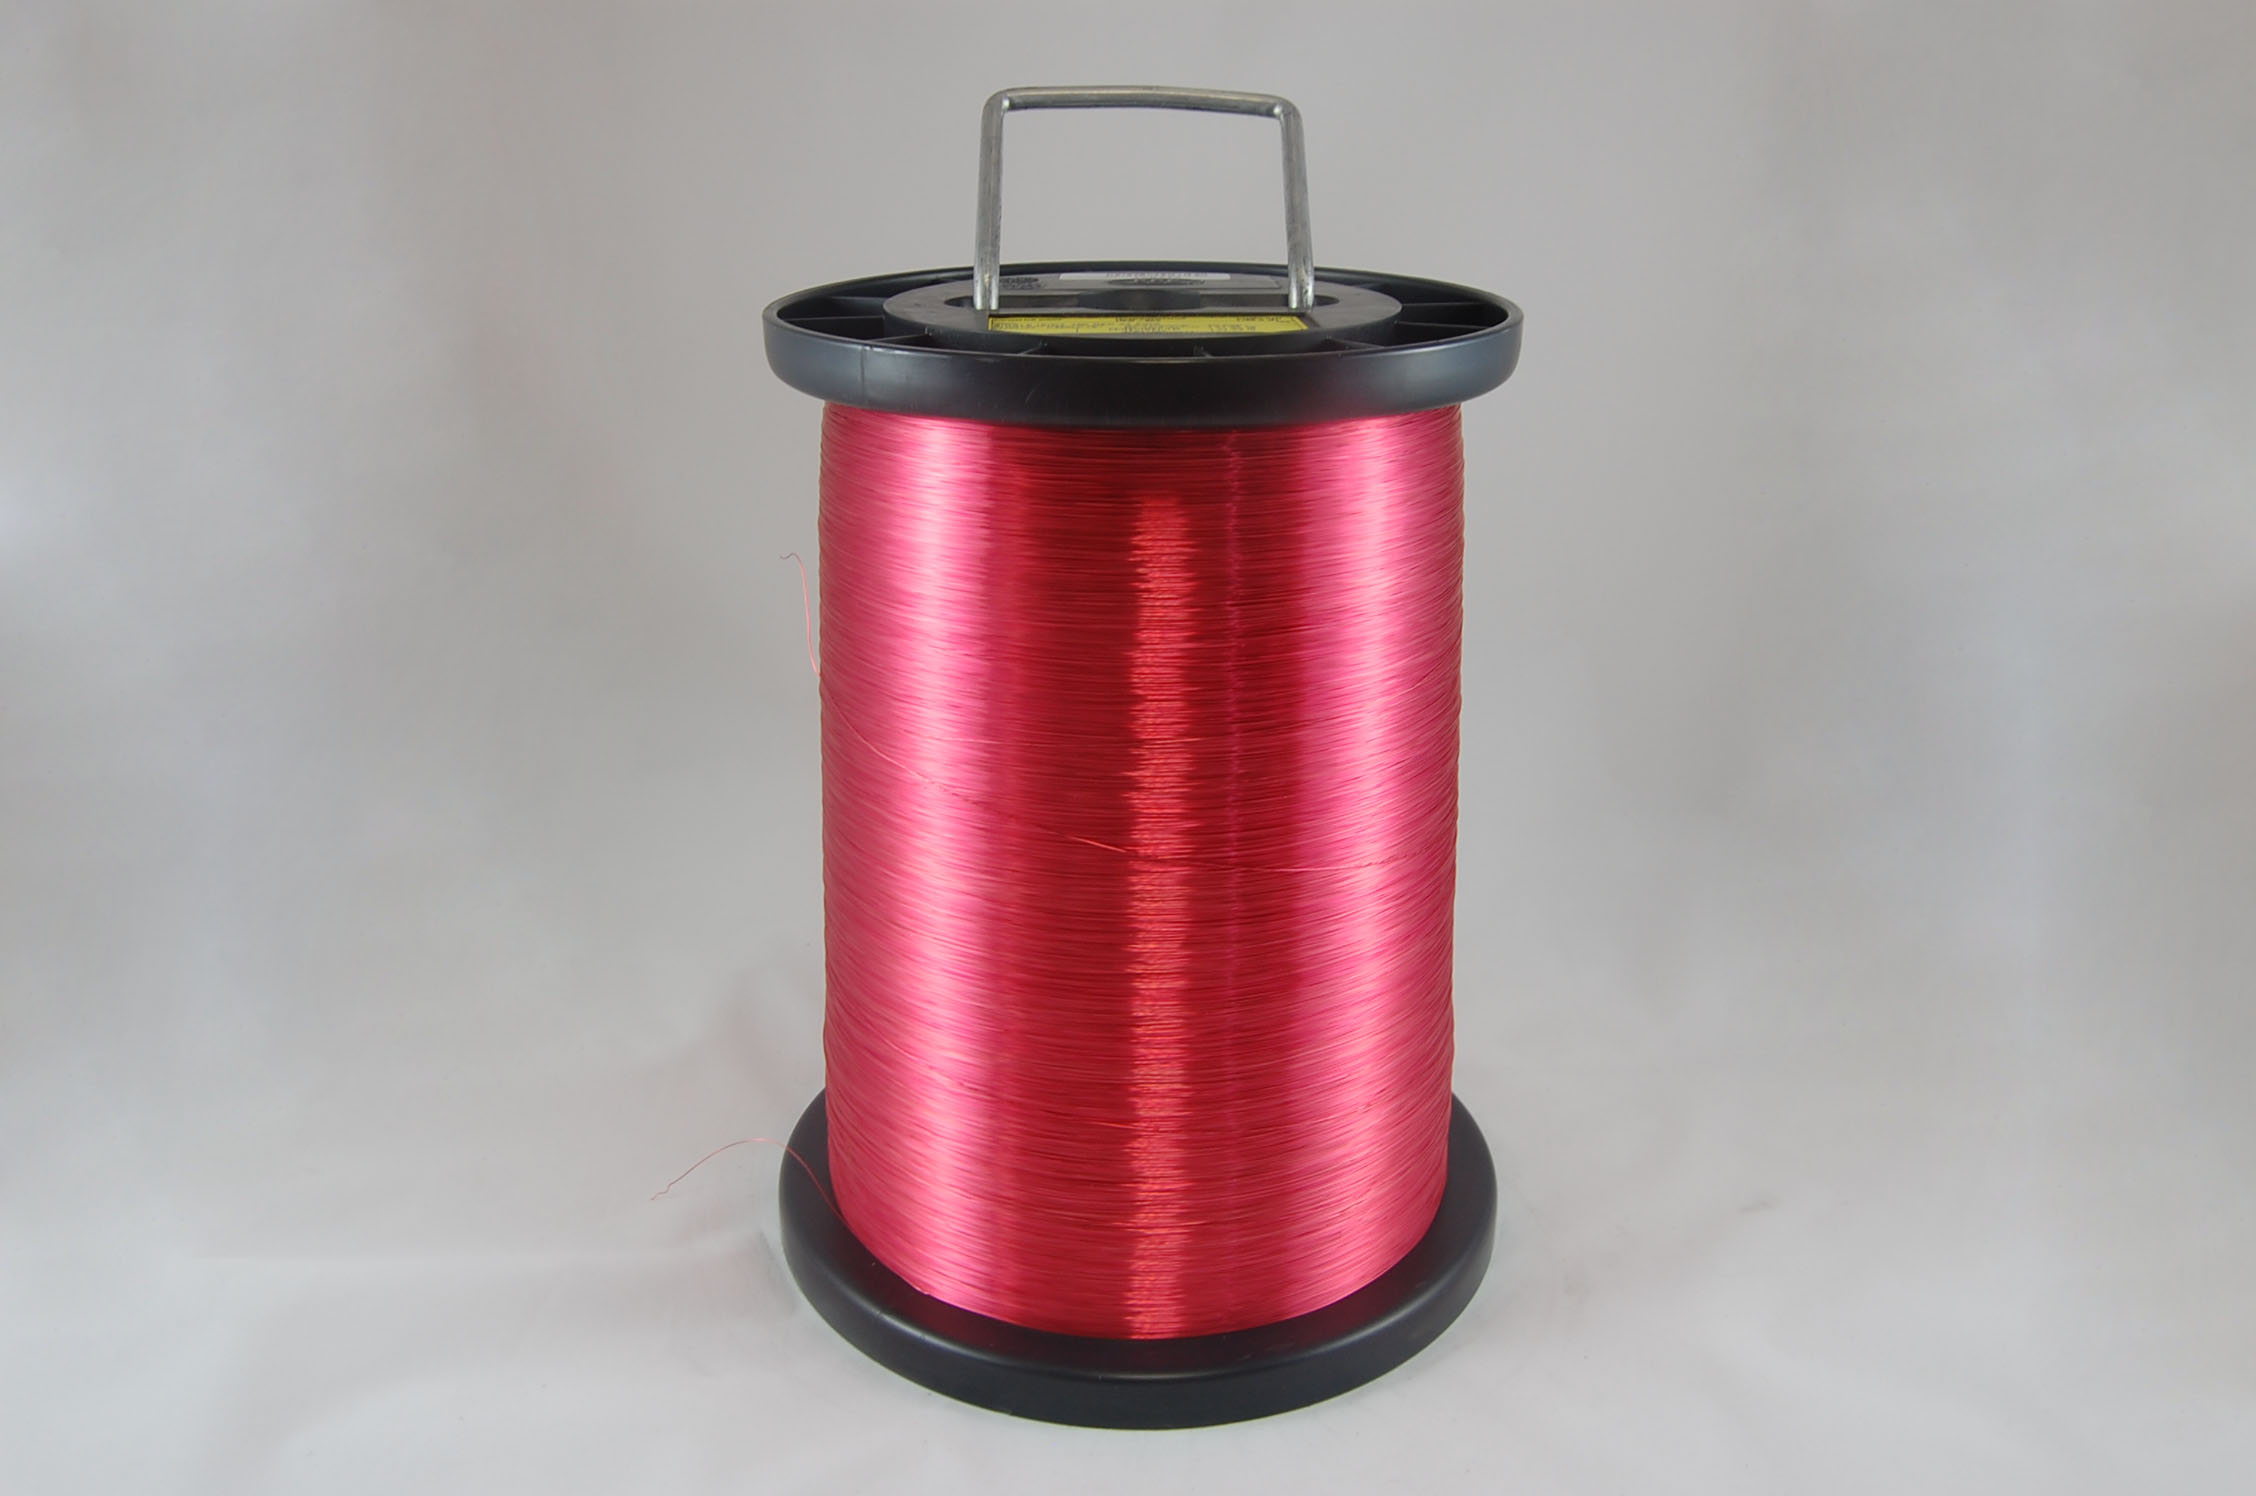 #14.5 Heavy INVEMID 200 Round MW 35 Copper Magnet Wire 200°C, copper, 45 LB half pack pail (average wght.)